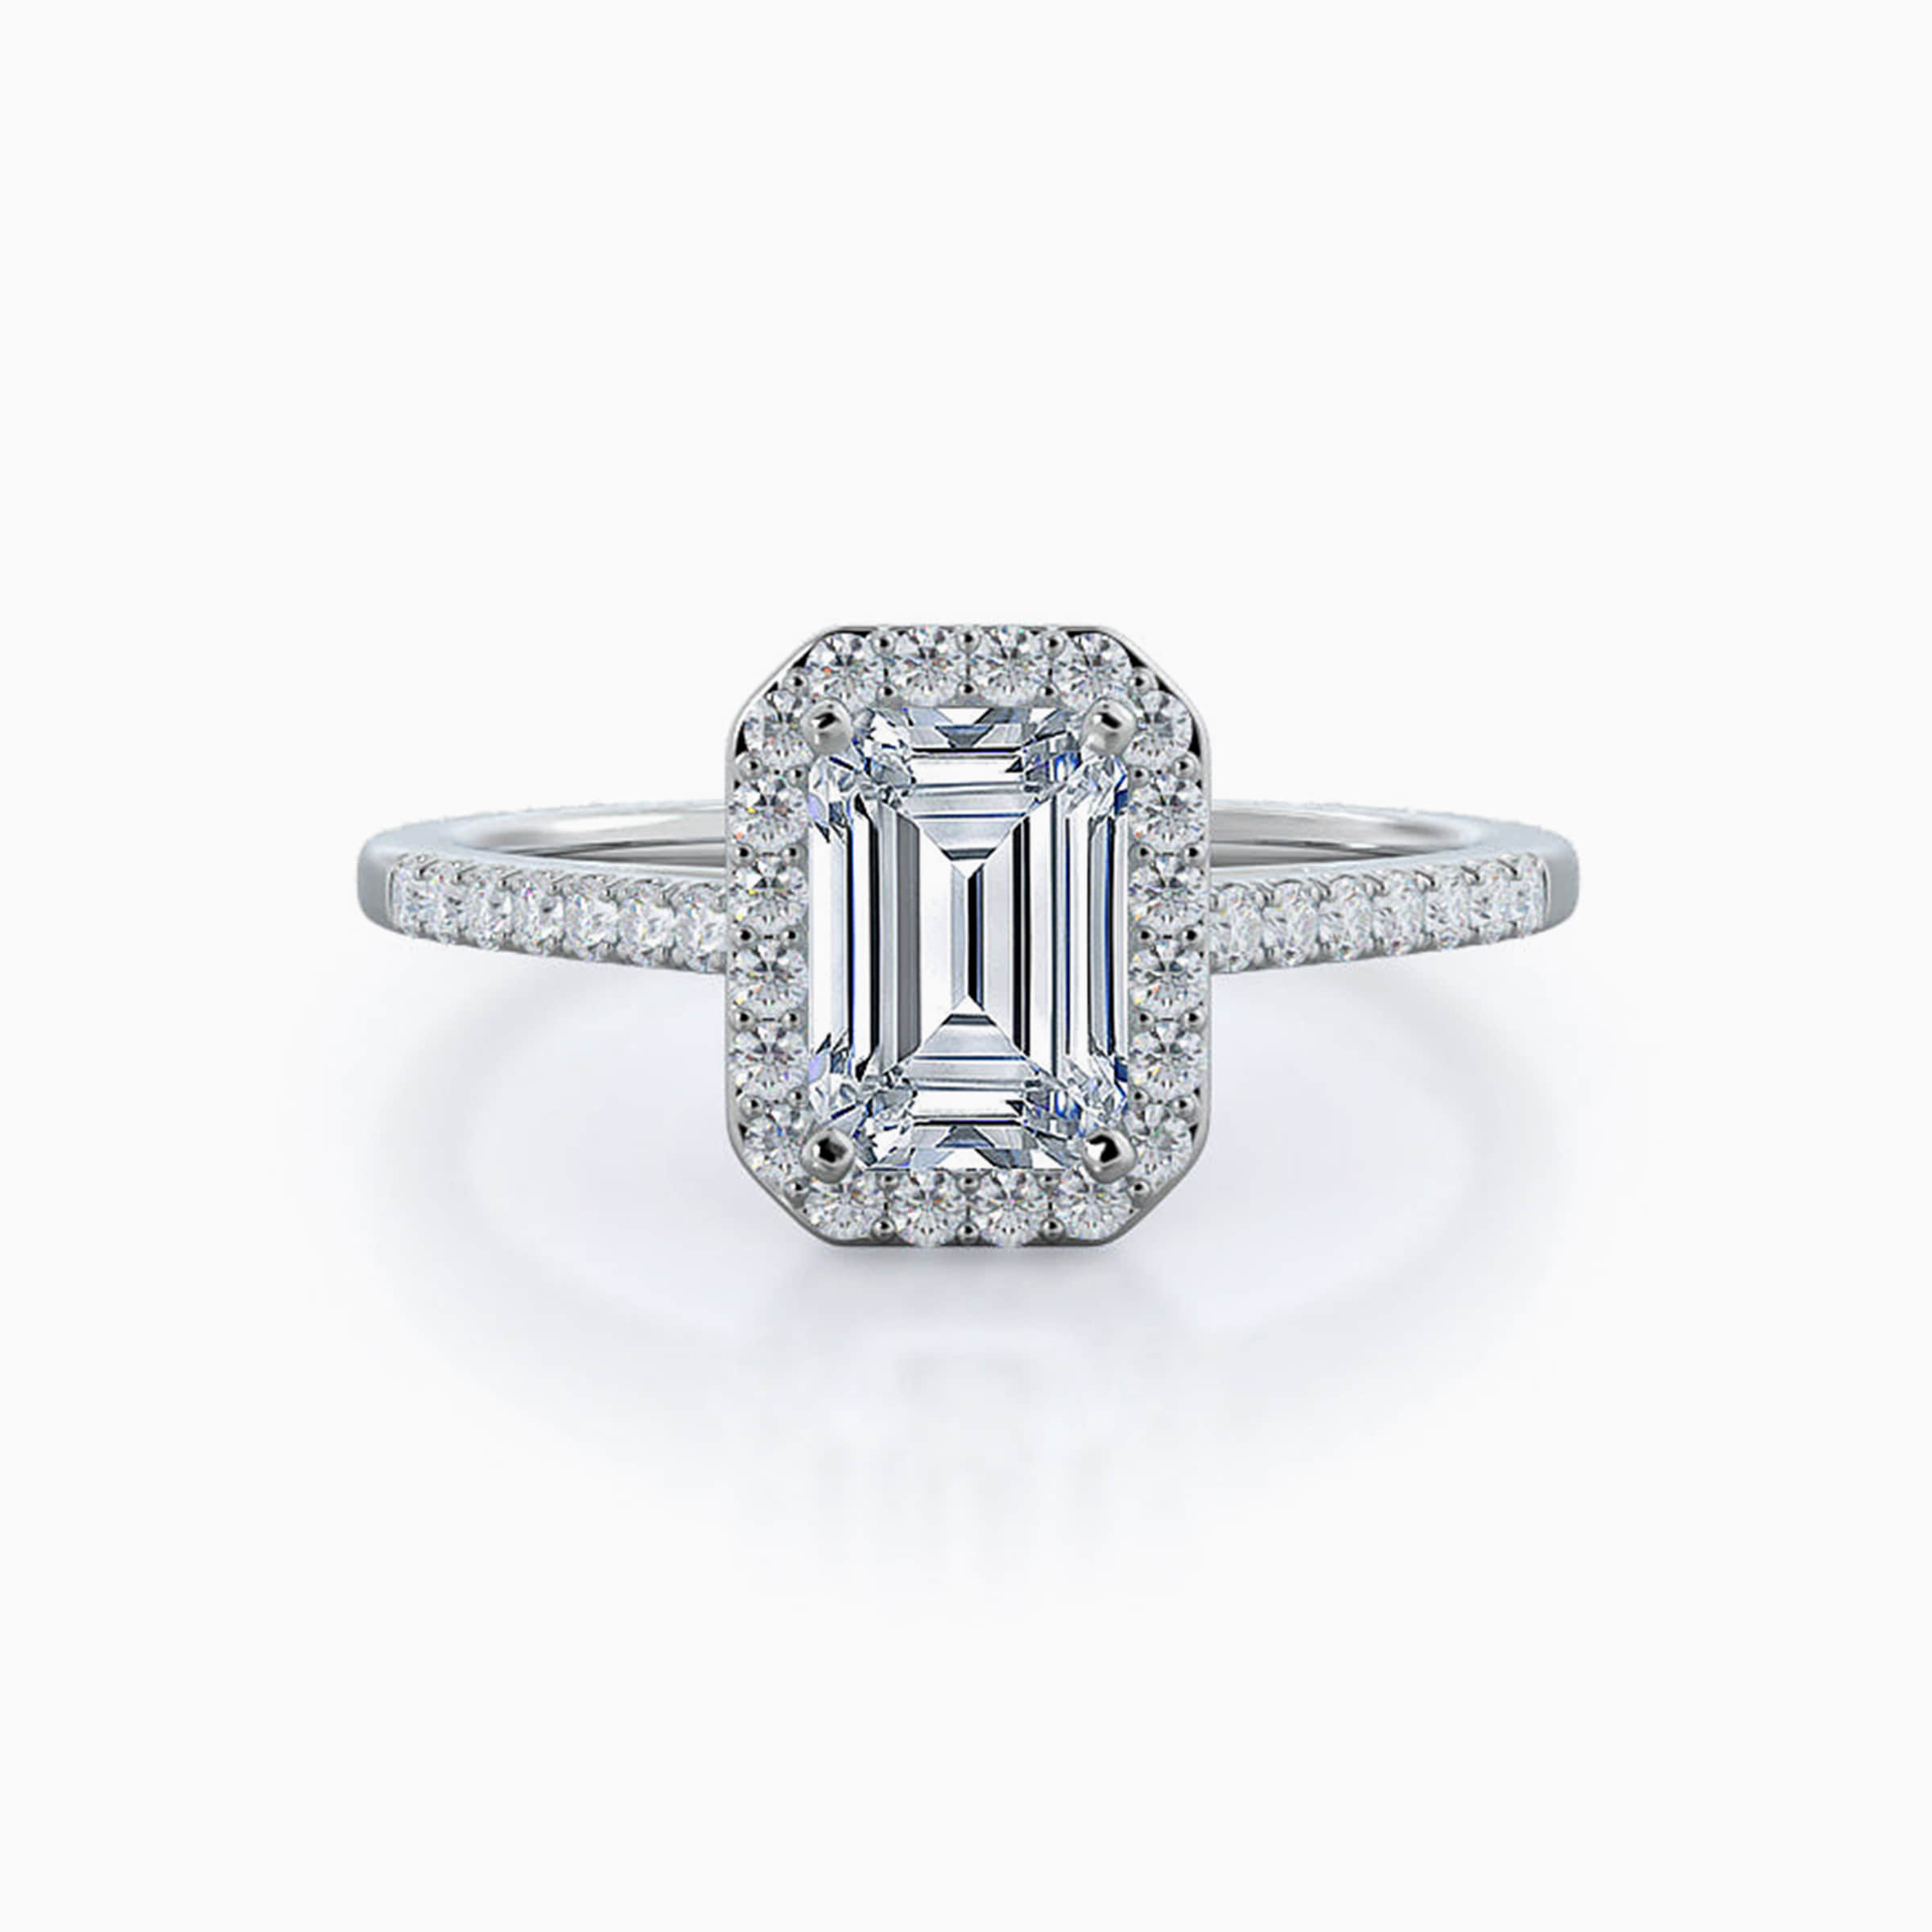 Darry Ring 3 carat emerald cut halo engagement ring in platinum